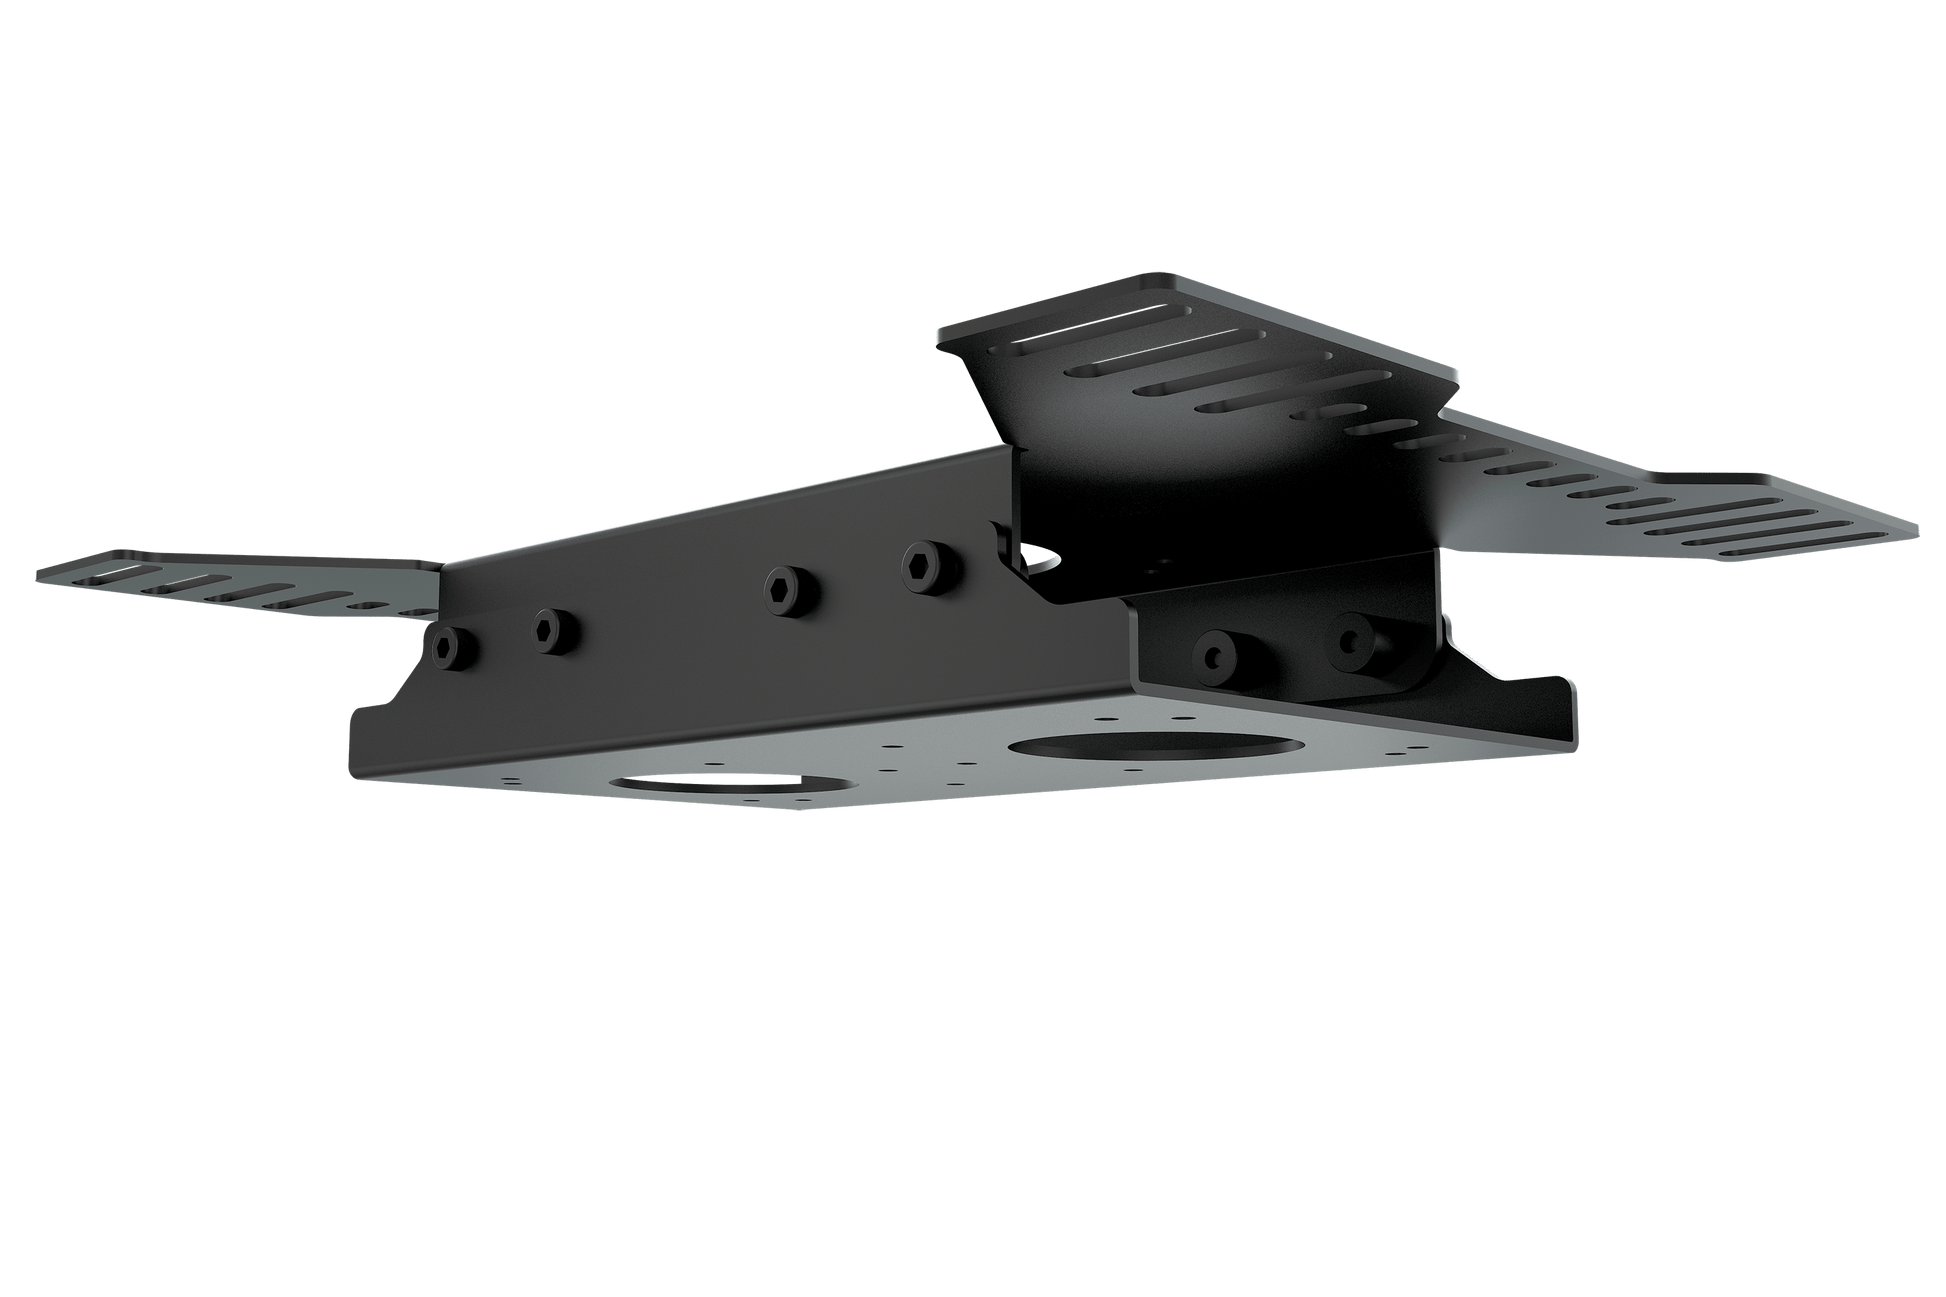 Bass Shaker Universal Adapter Chair – MTSIM USA